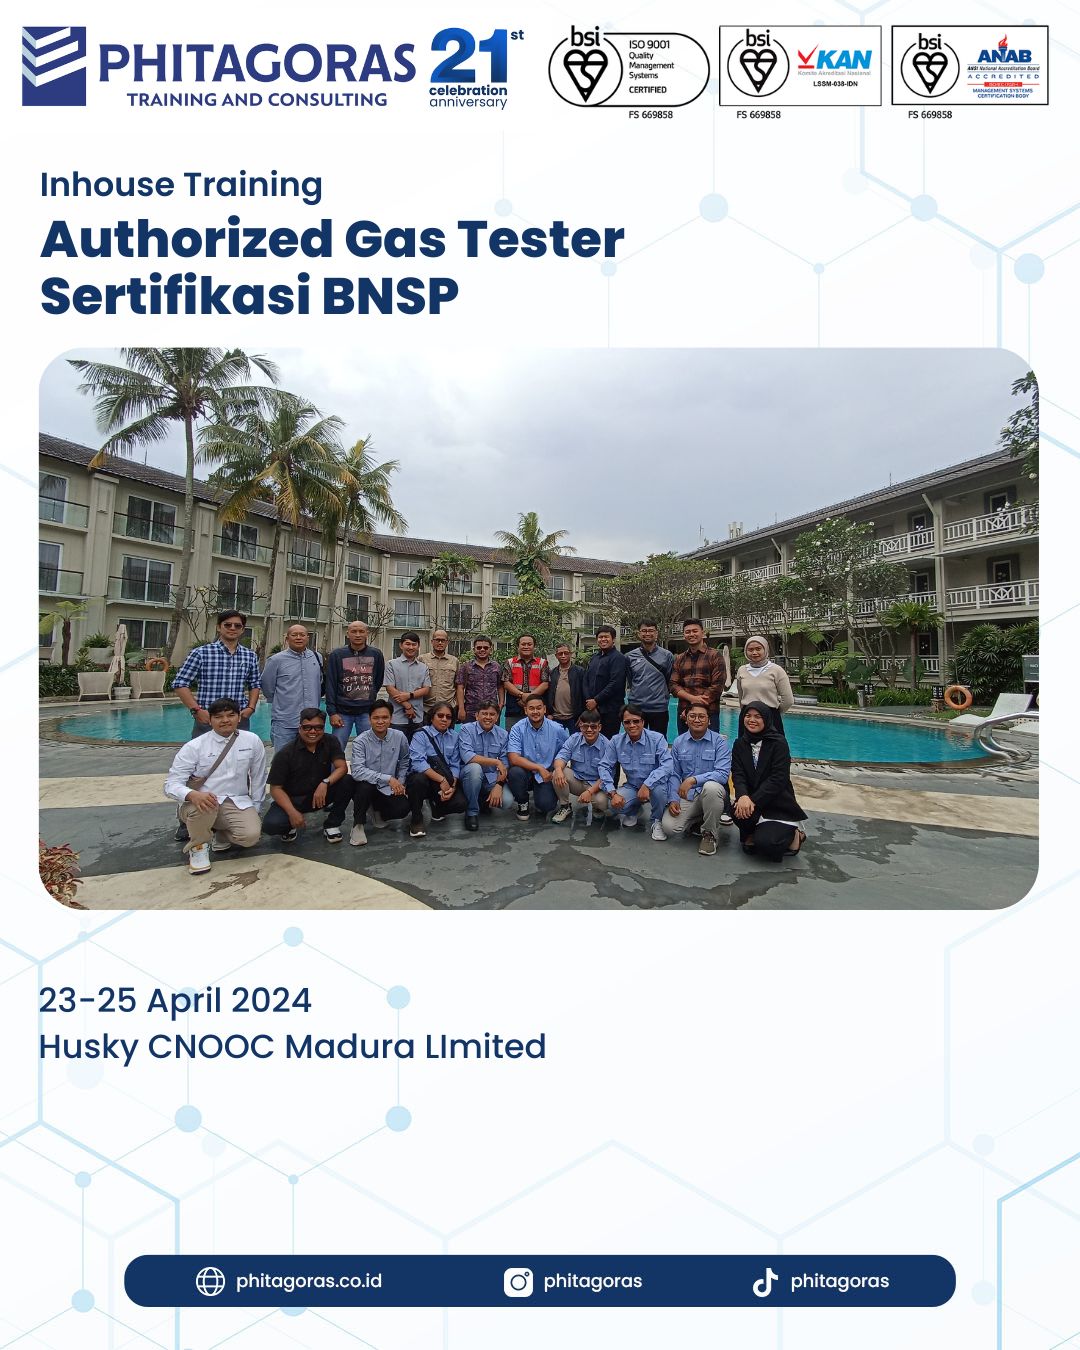 Inhouse Training Authorized Gas Tester Sertifikasi BNSP - Husky CNOOC Madura Limited 23-25 April 2024